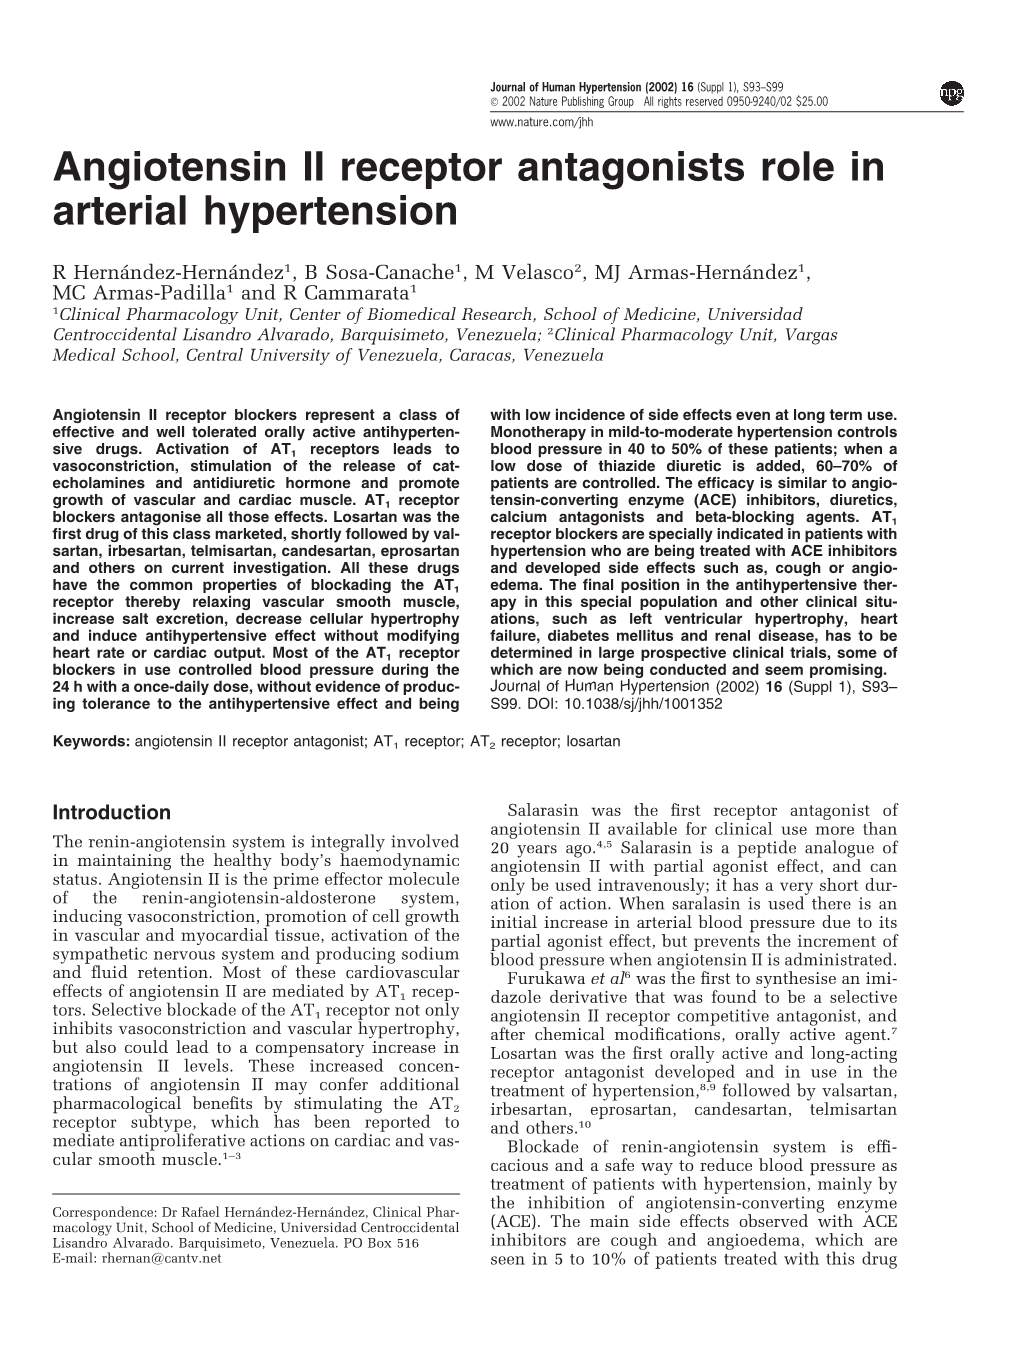 Angiotensin II Receptor Antagonists Role in Arterial Hypertension